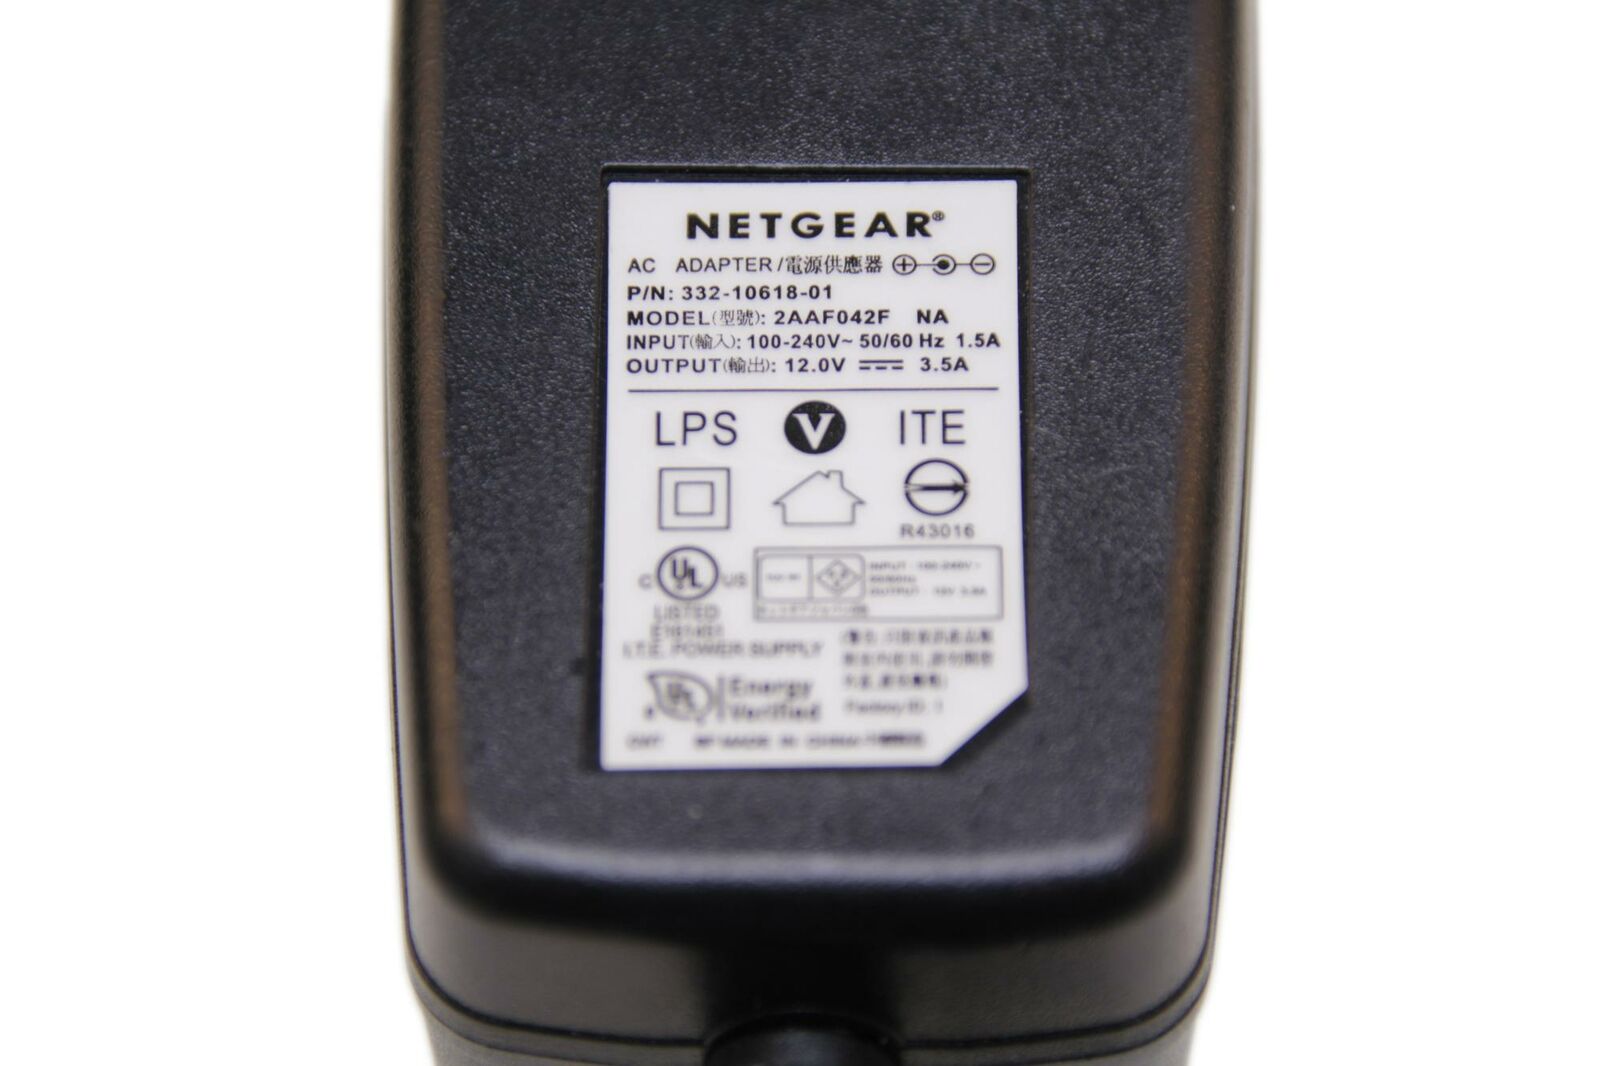 Genuine Netgear Nighthawk Pro Gaming Router ( XR450 ) AC Adapter Brand: Netgear Type: AC & DC Compatible Brand: Ne